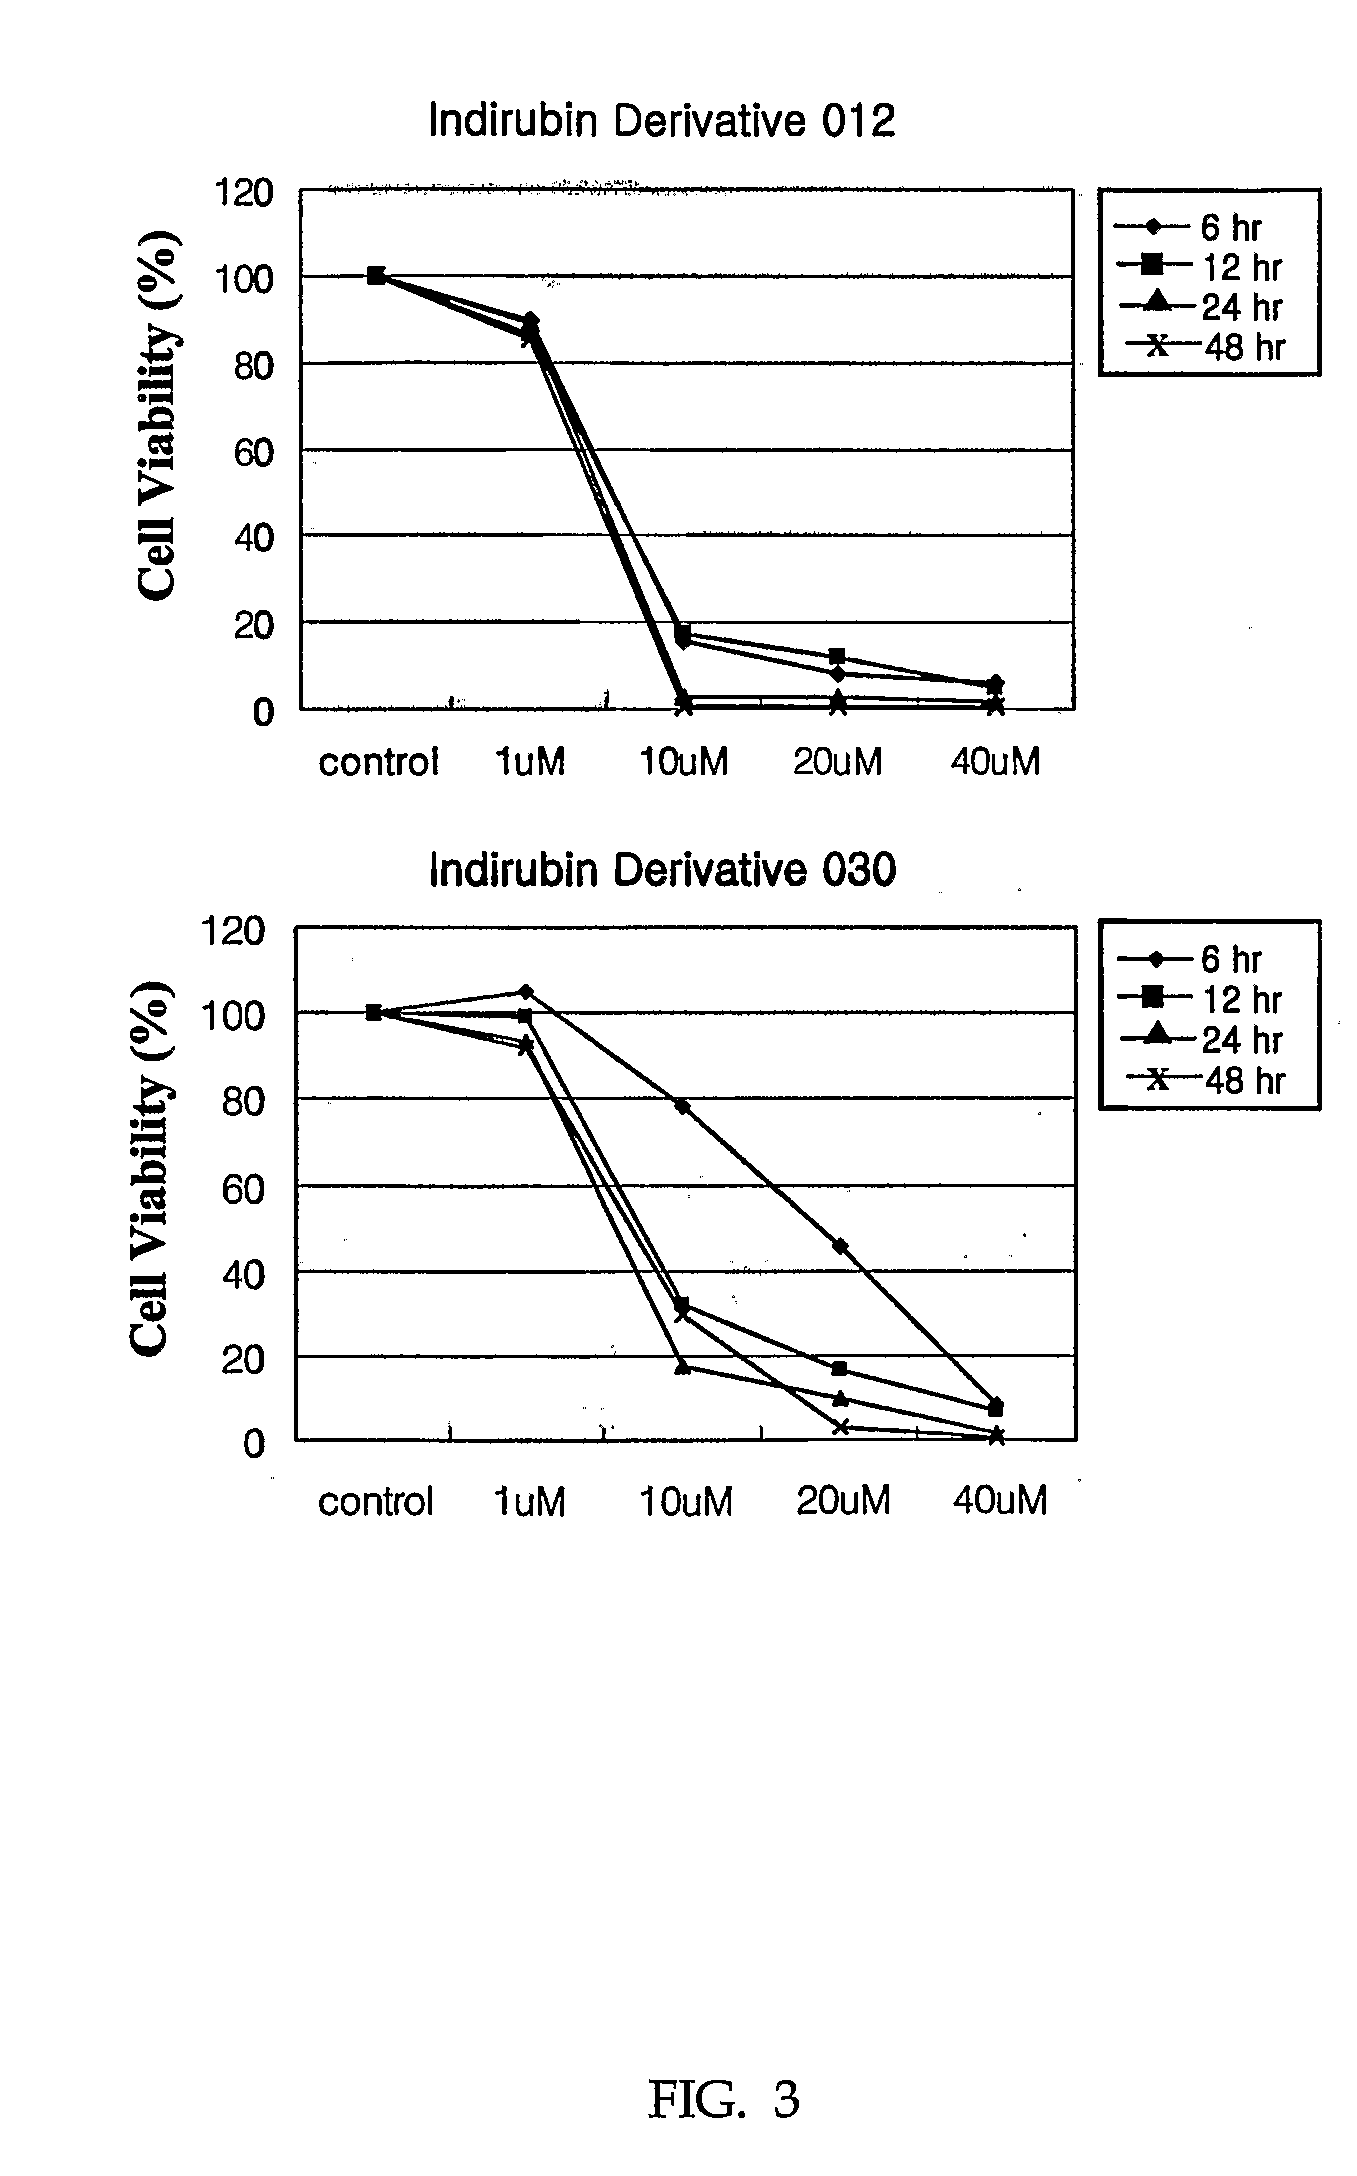 Indirubin derivatives having anticancer property against human cancer cell line